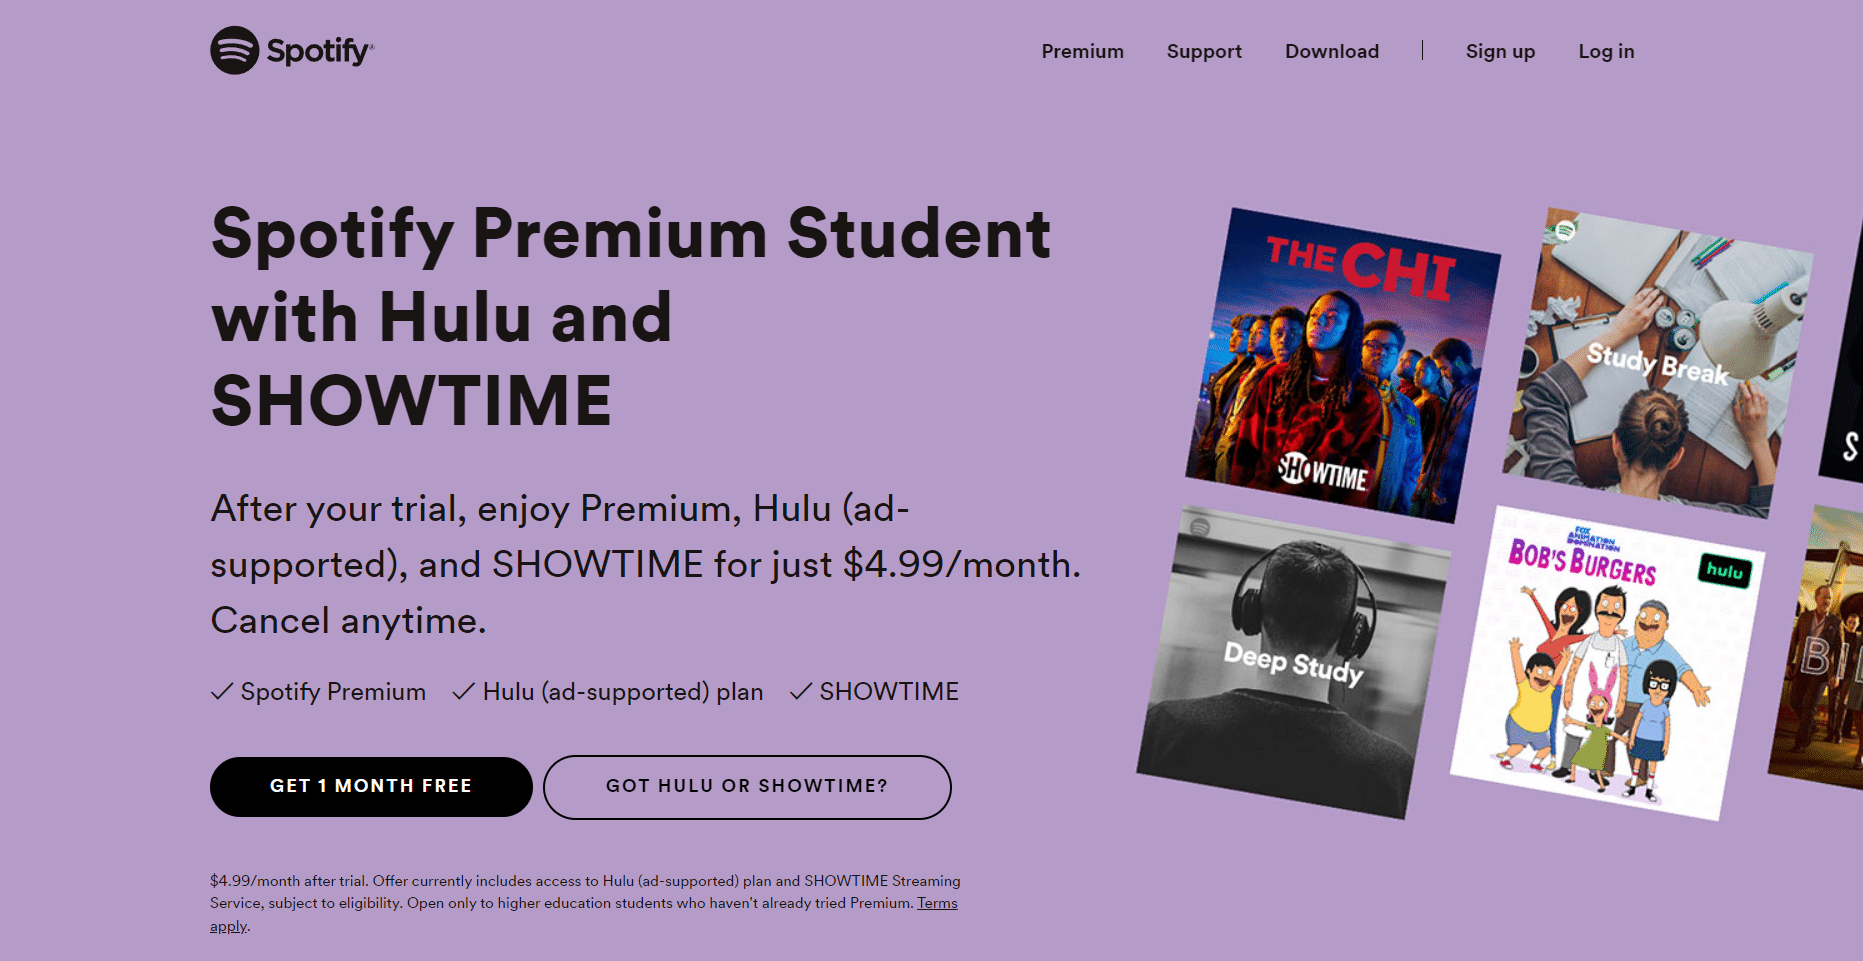 Spotify Premium Student plan